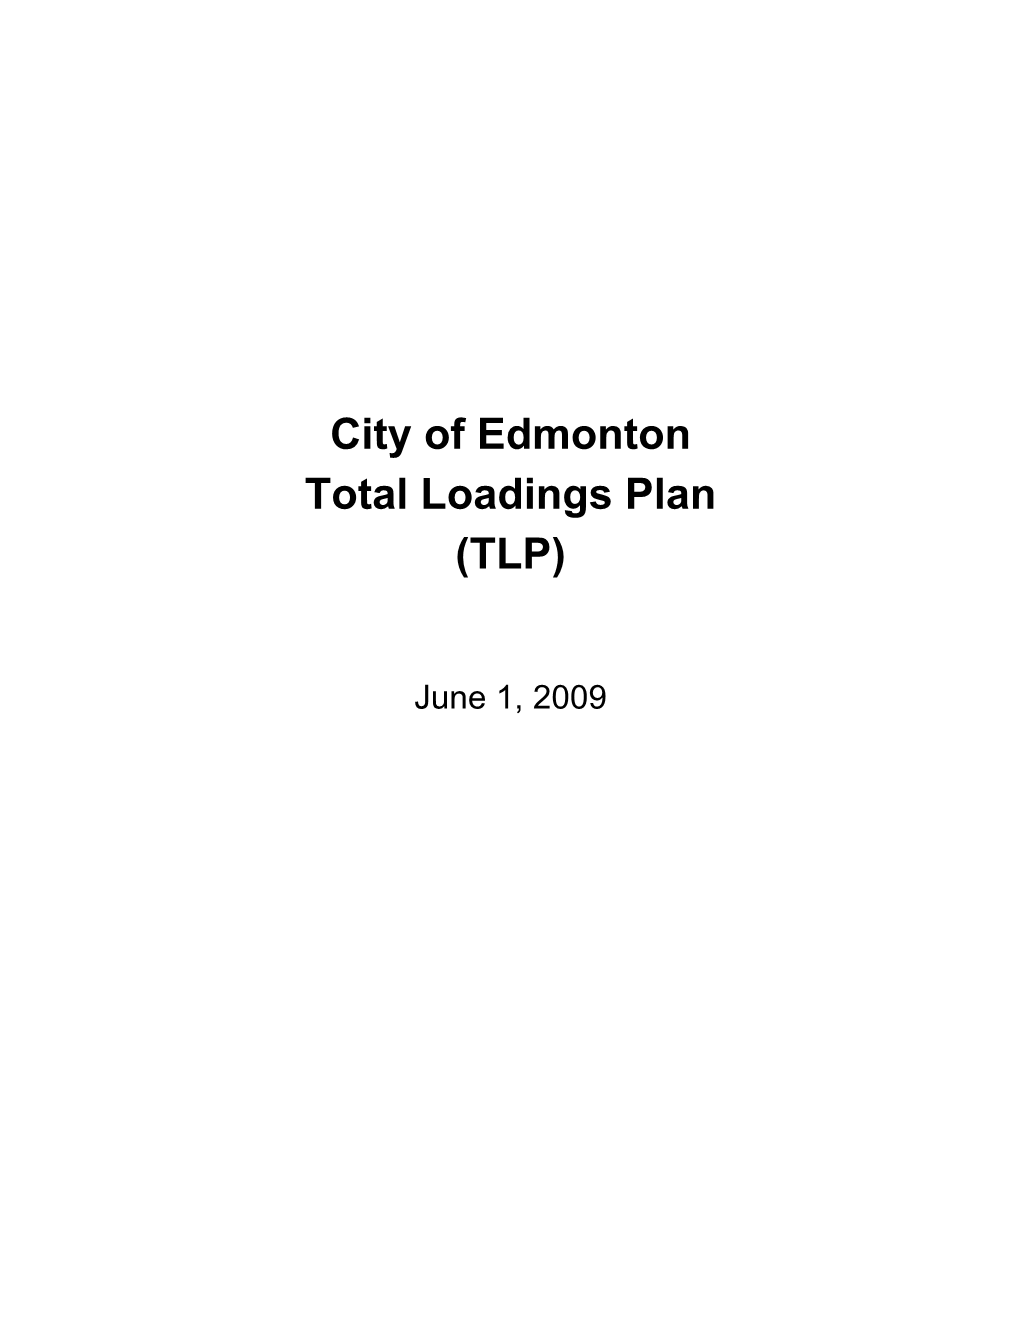 City of Edmonton Total Loadings Plan (TLP)